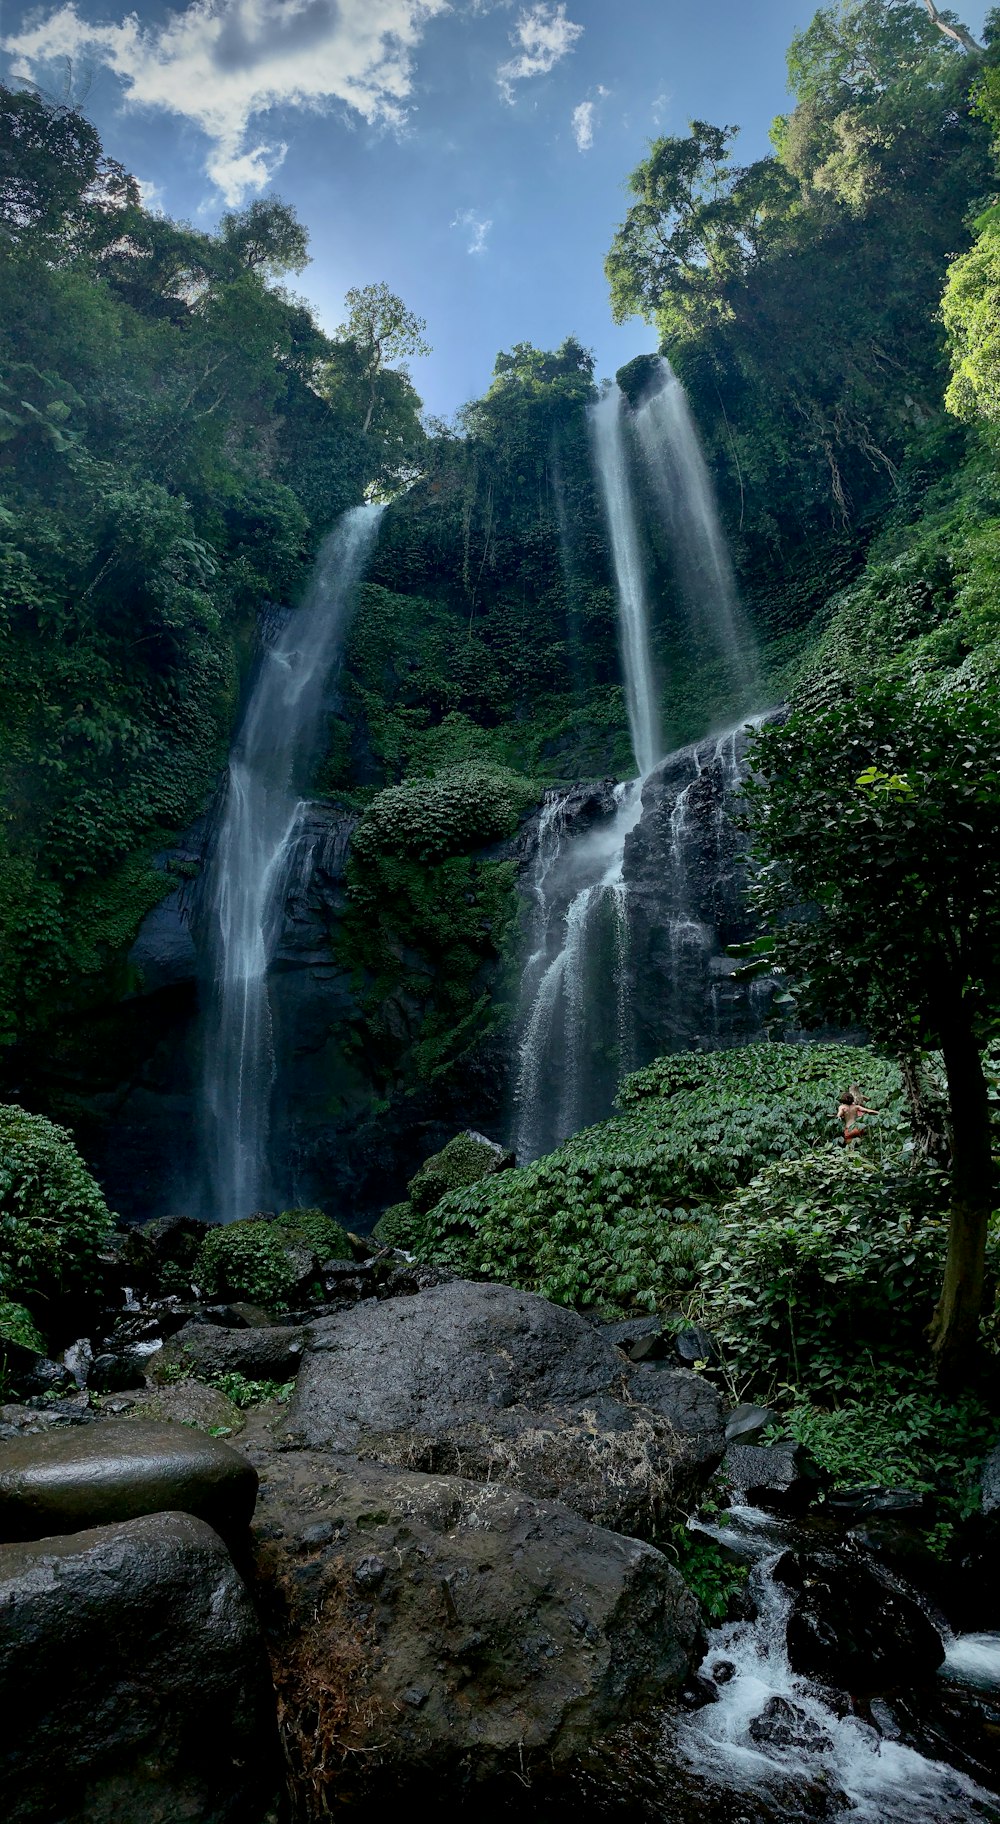 waterfalls on rocky ground during daytime